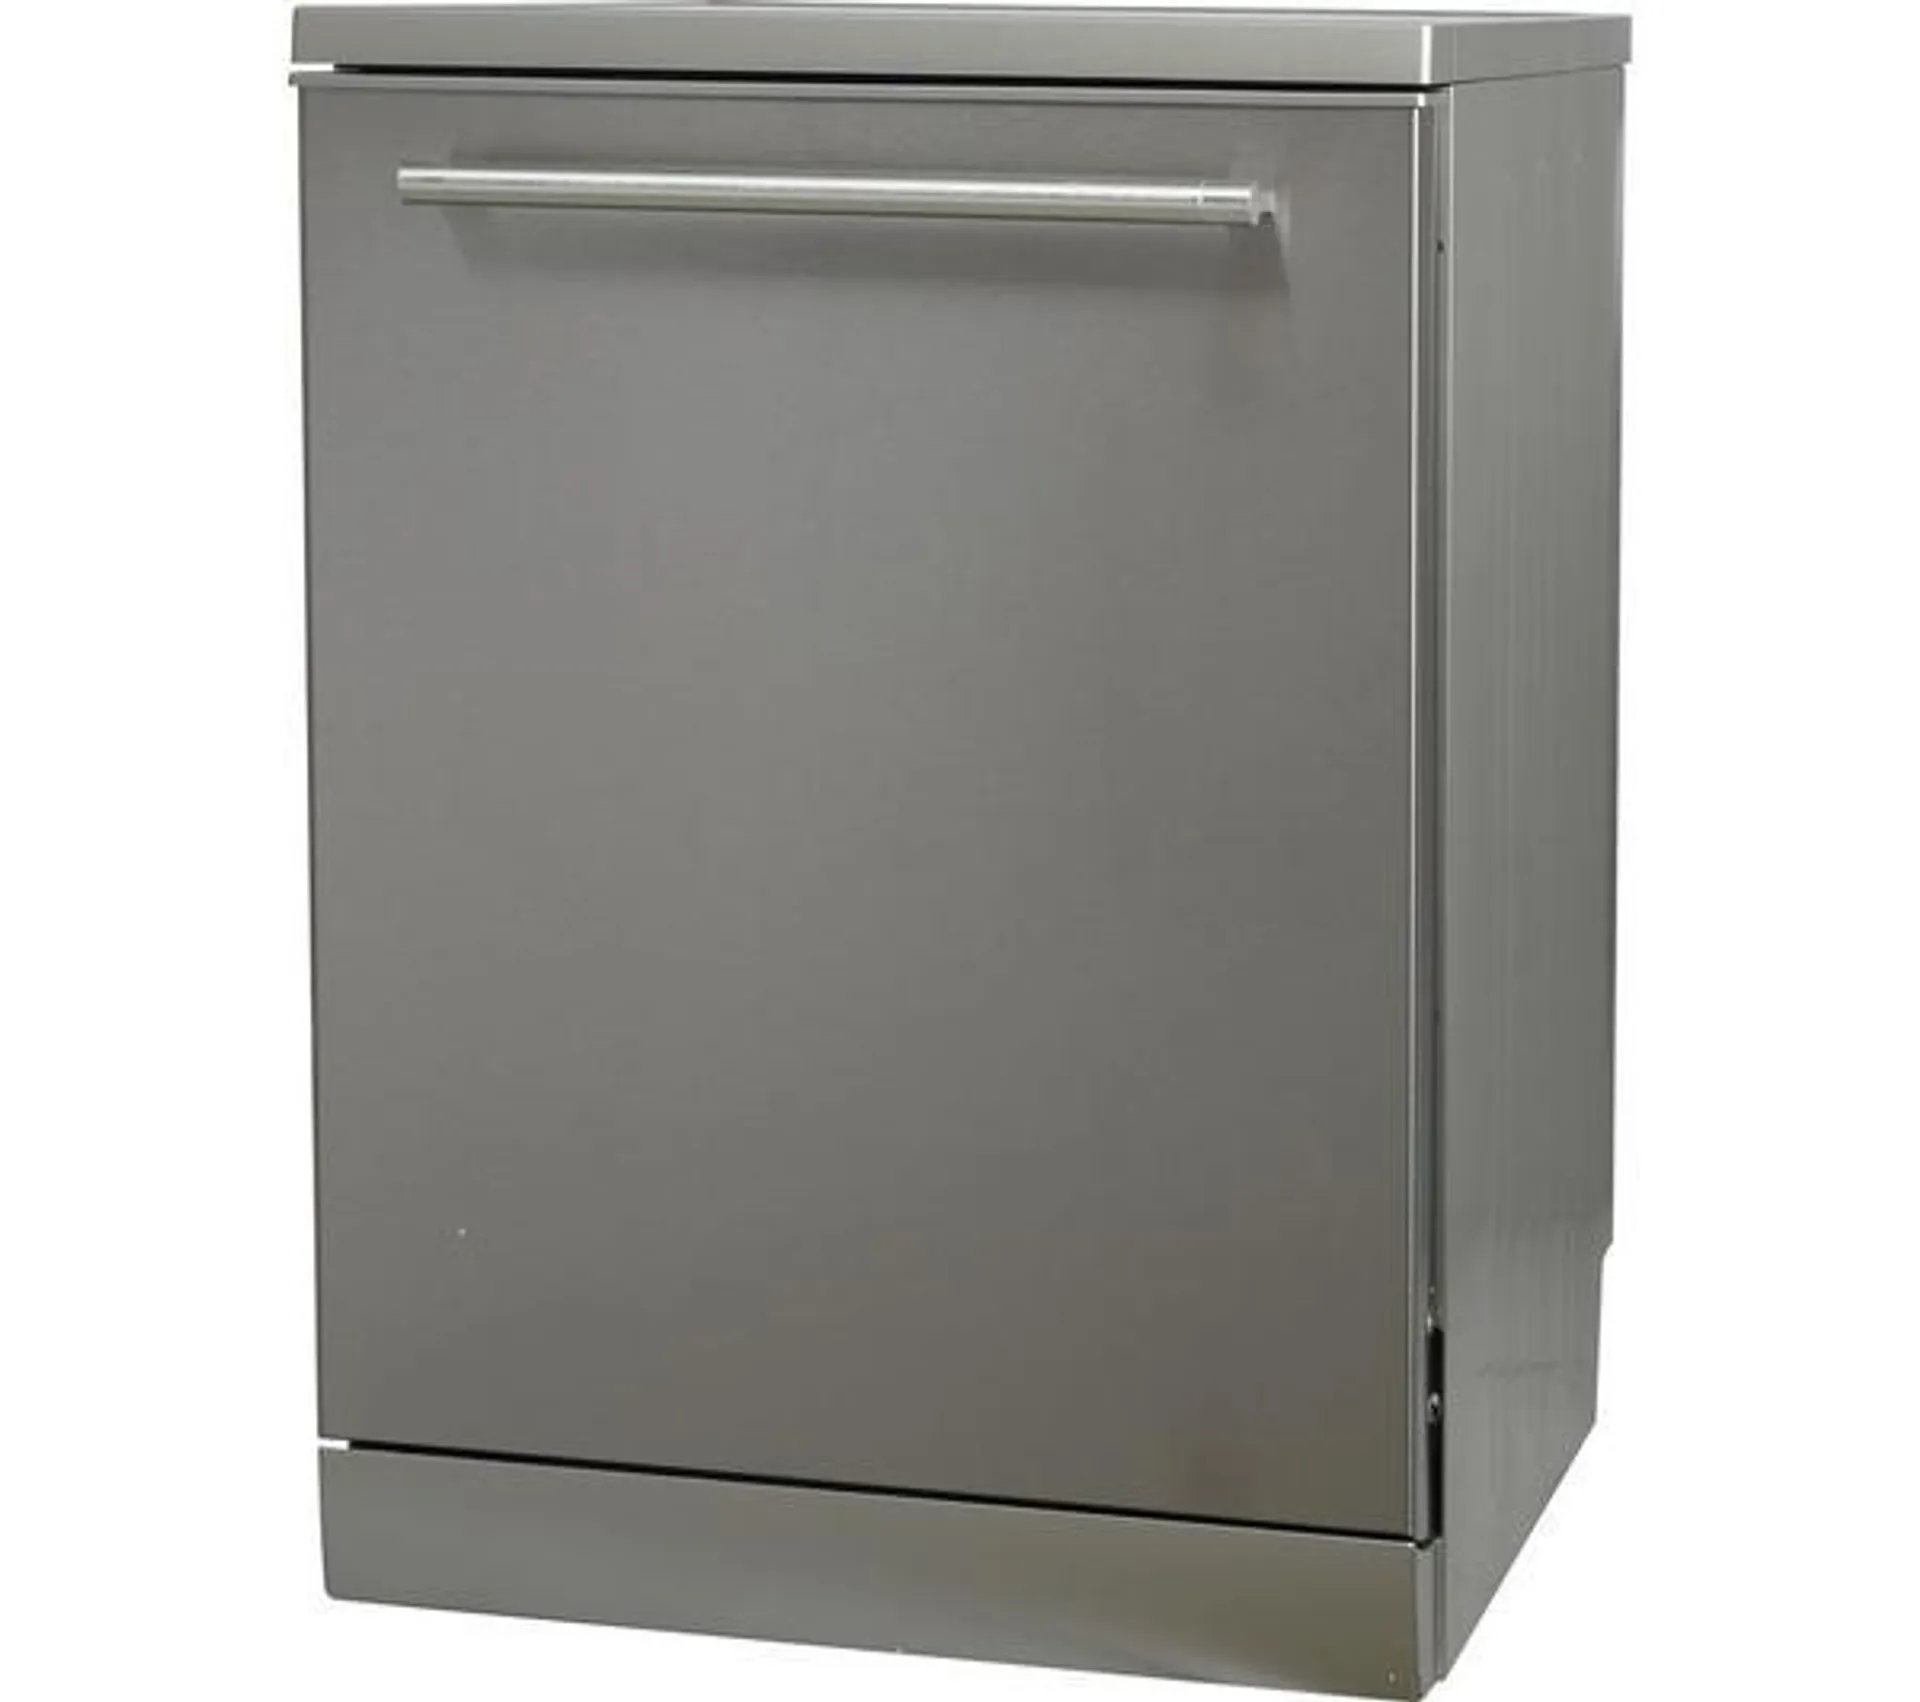 KENWOOD KDW60X20 Full-size Dishwasher - Inox